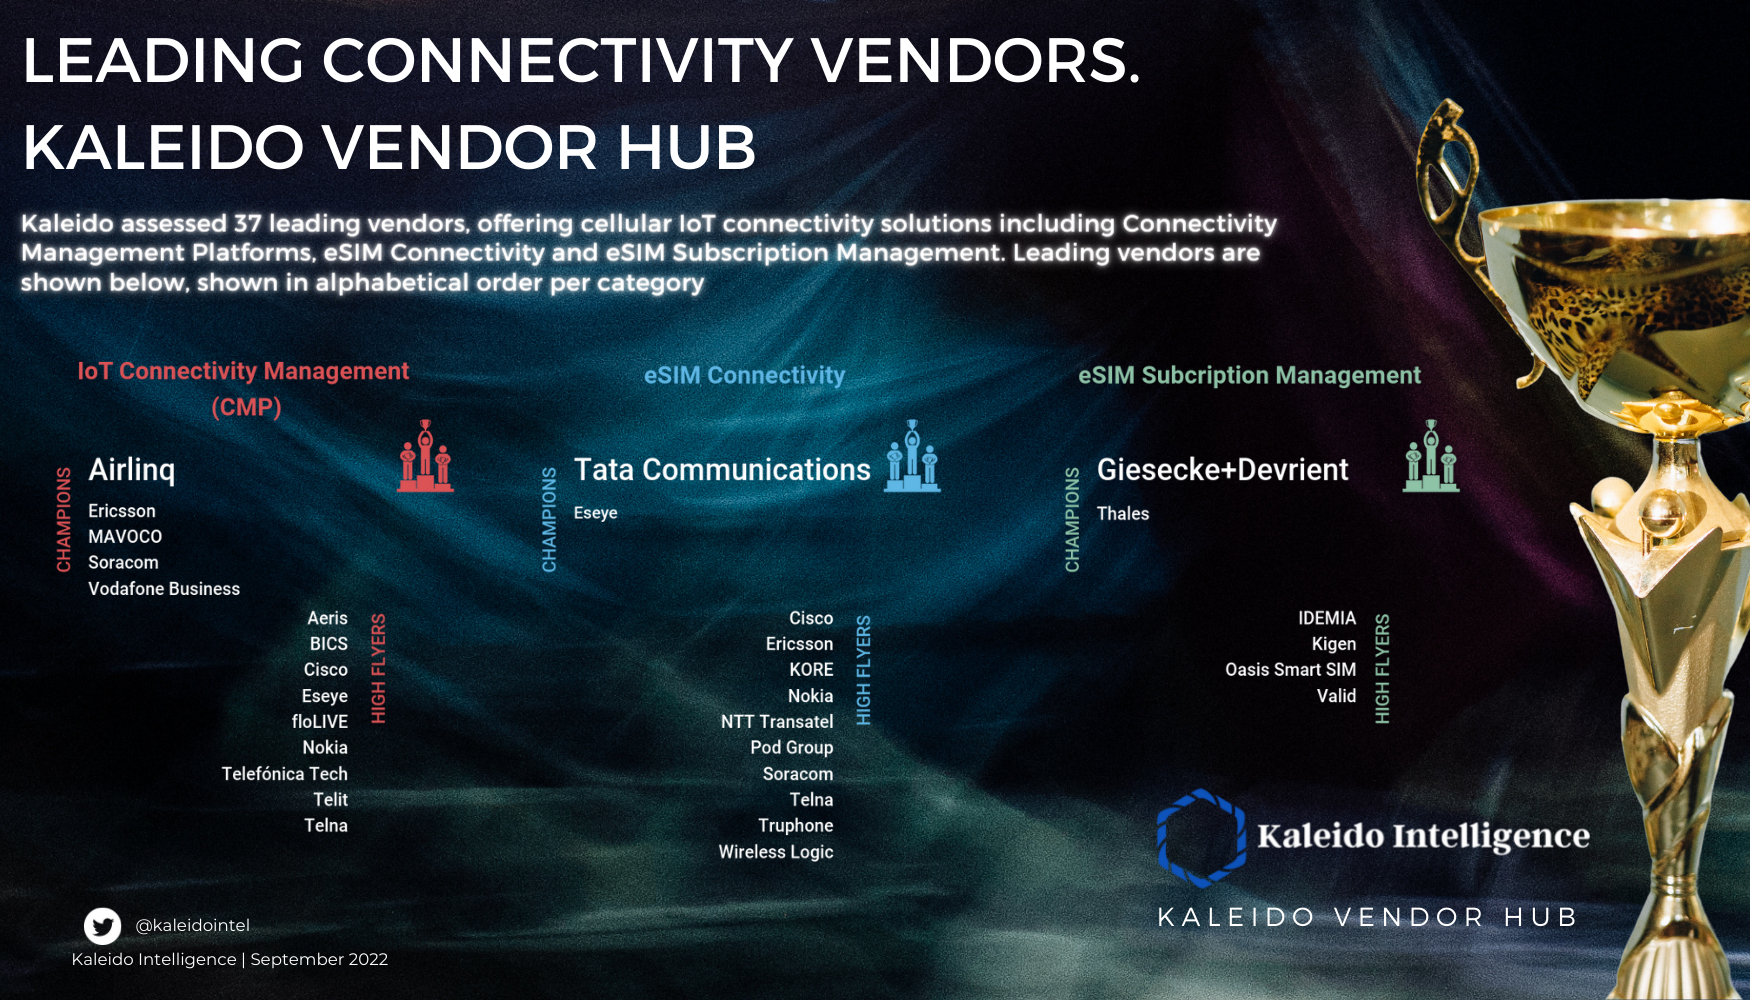 Three Group Solutions - Kaleido Vendor Hub